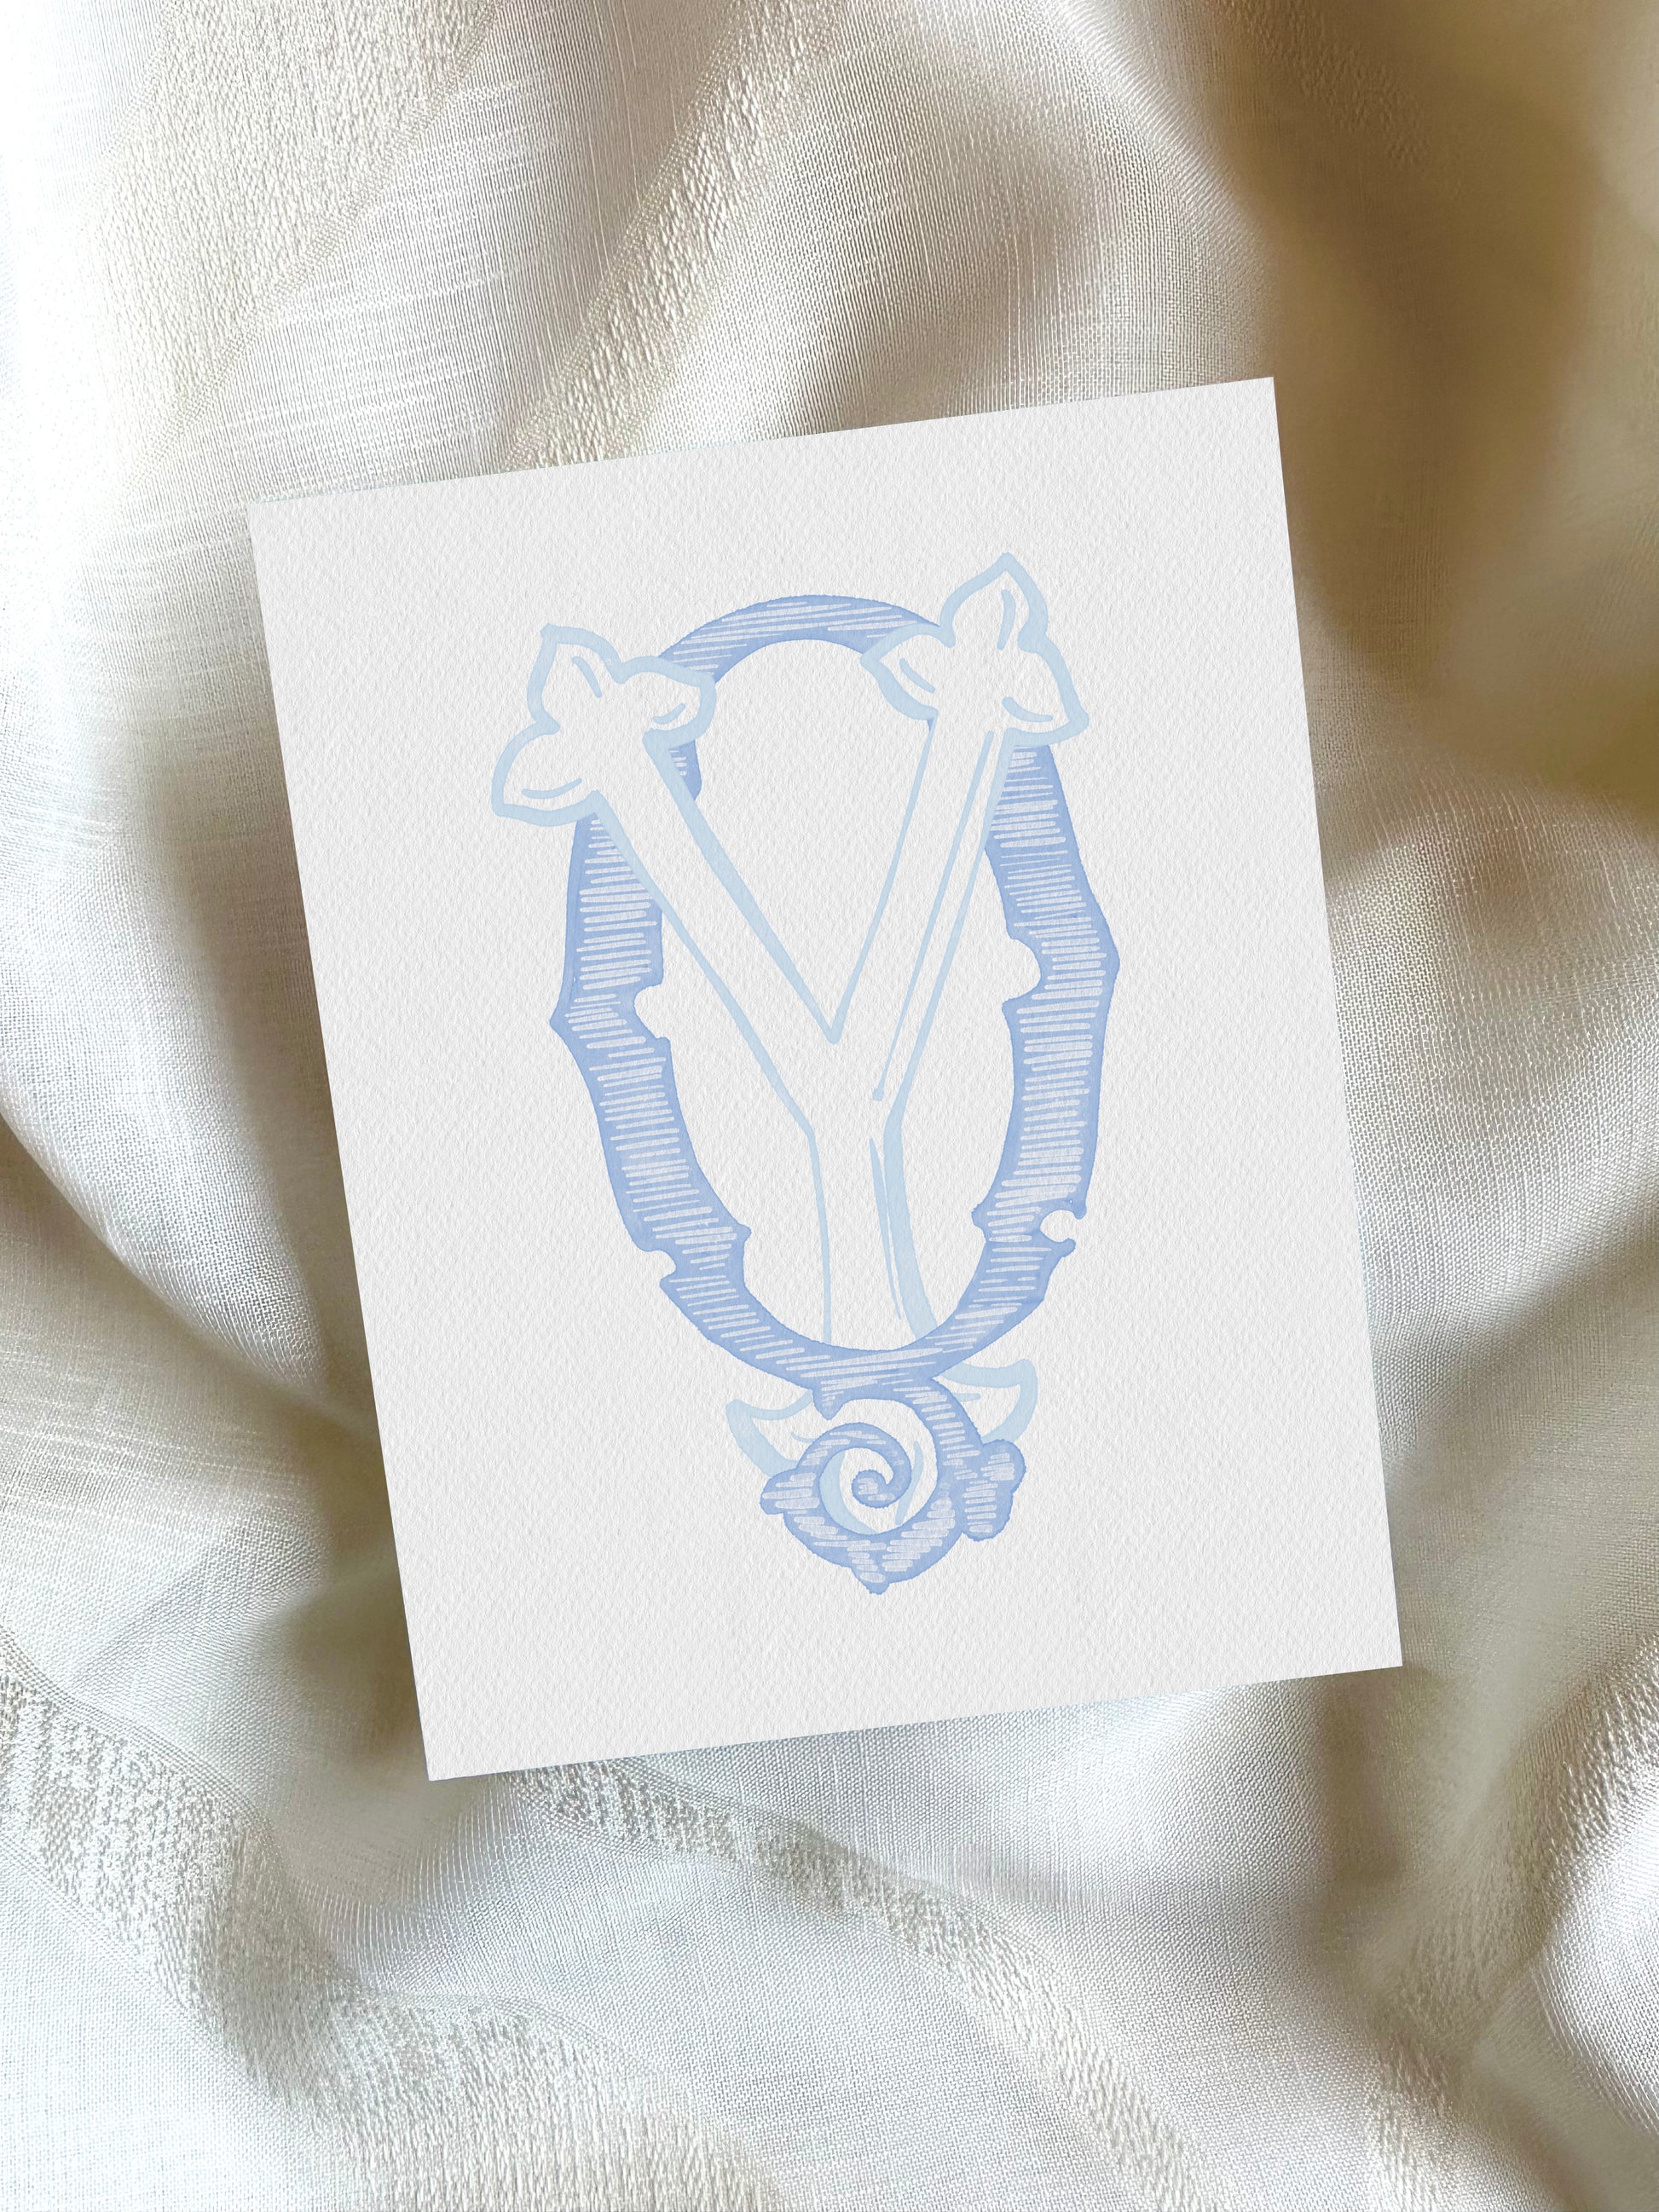 2 Letter Monogram with Letters QY YQ | Digital Download - Wedding Monogram SVG, Personal Logo, Wedding Logo for Wedding Invitations The Wedding Crest Lab